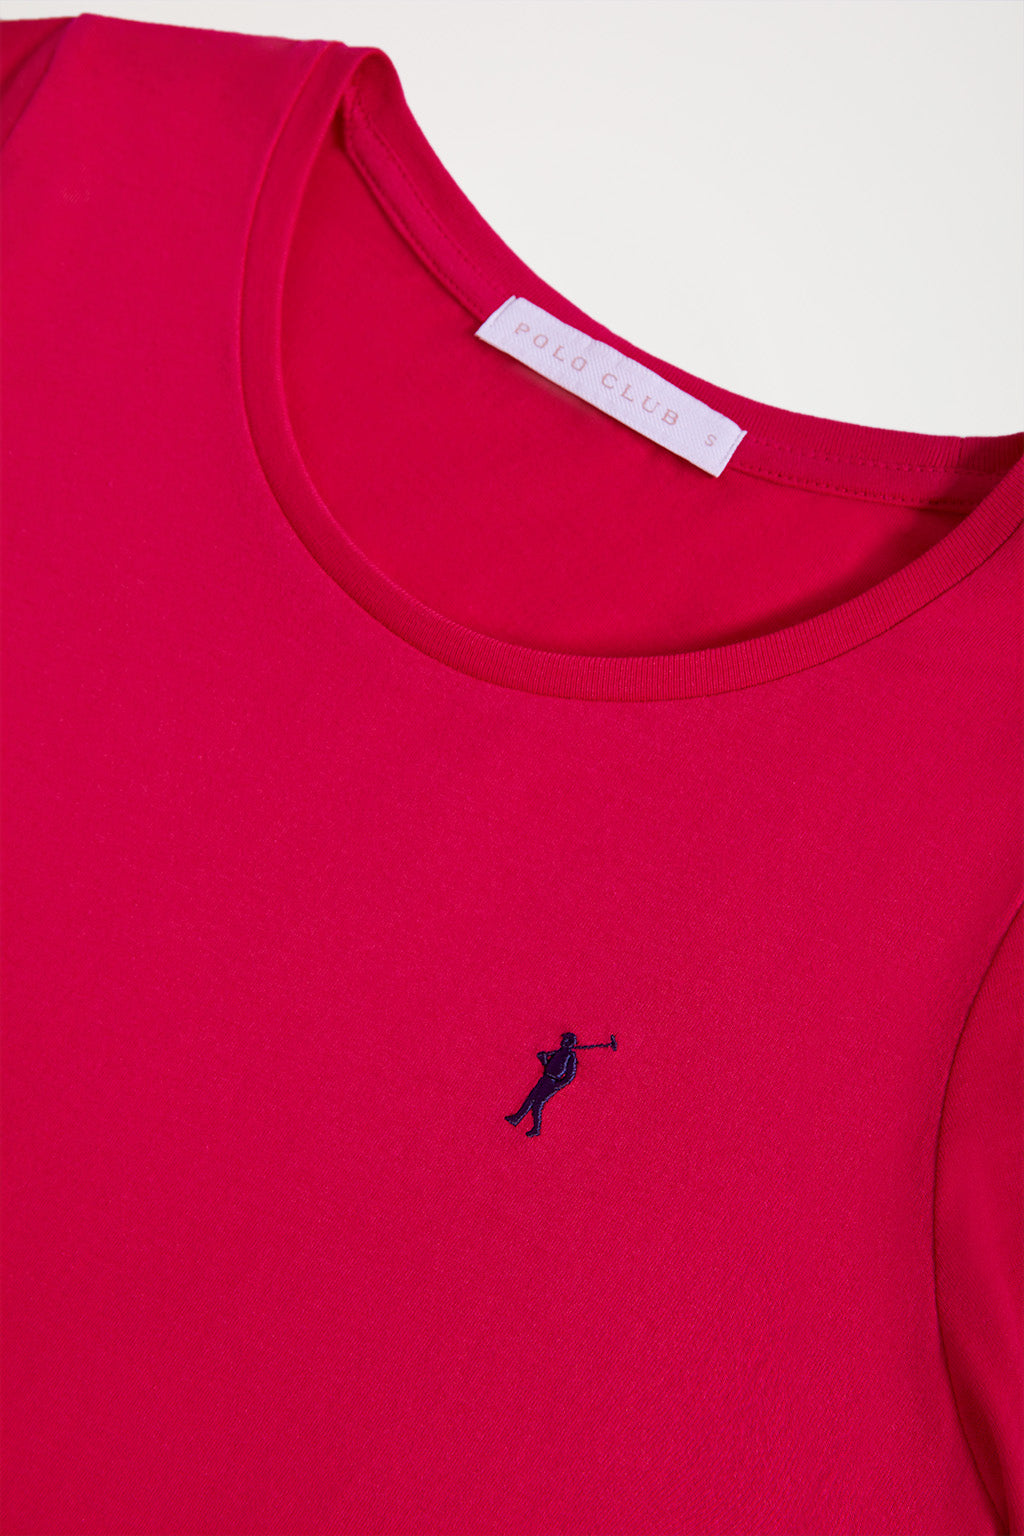 Camiseta roja manga larga, logo Rigby Go – Polo Club